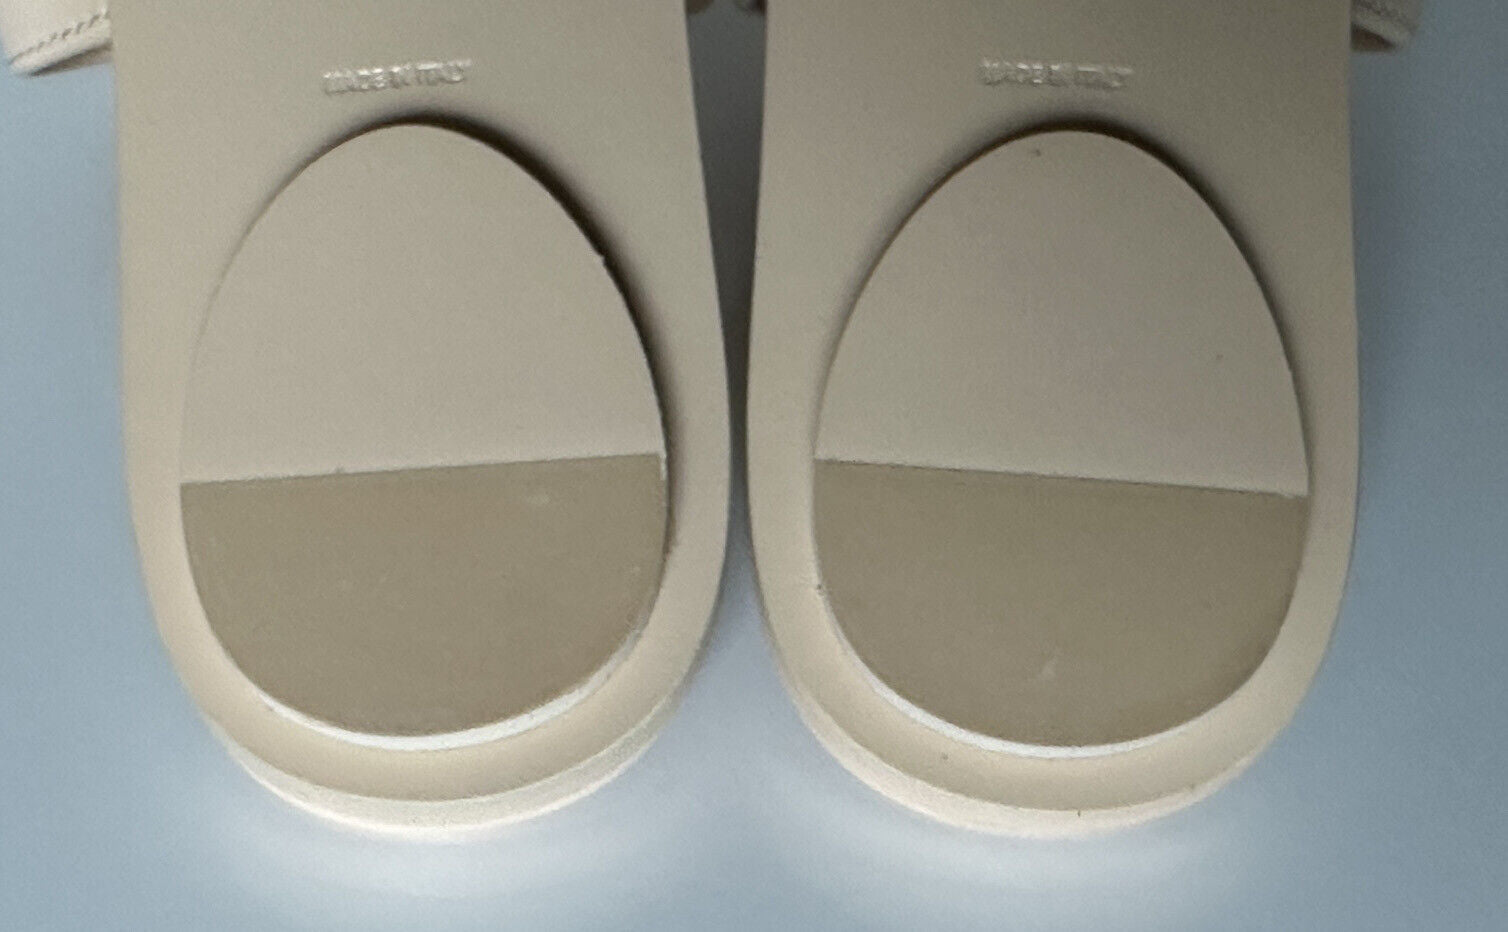 NIB Burberry Open Toe Women's Peach Leather Slides Sandals 7.5 (37.5) 8047843 IT